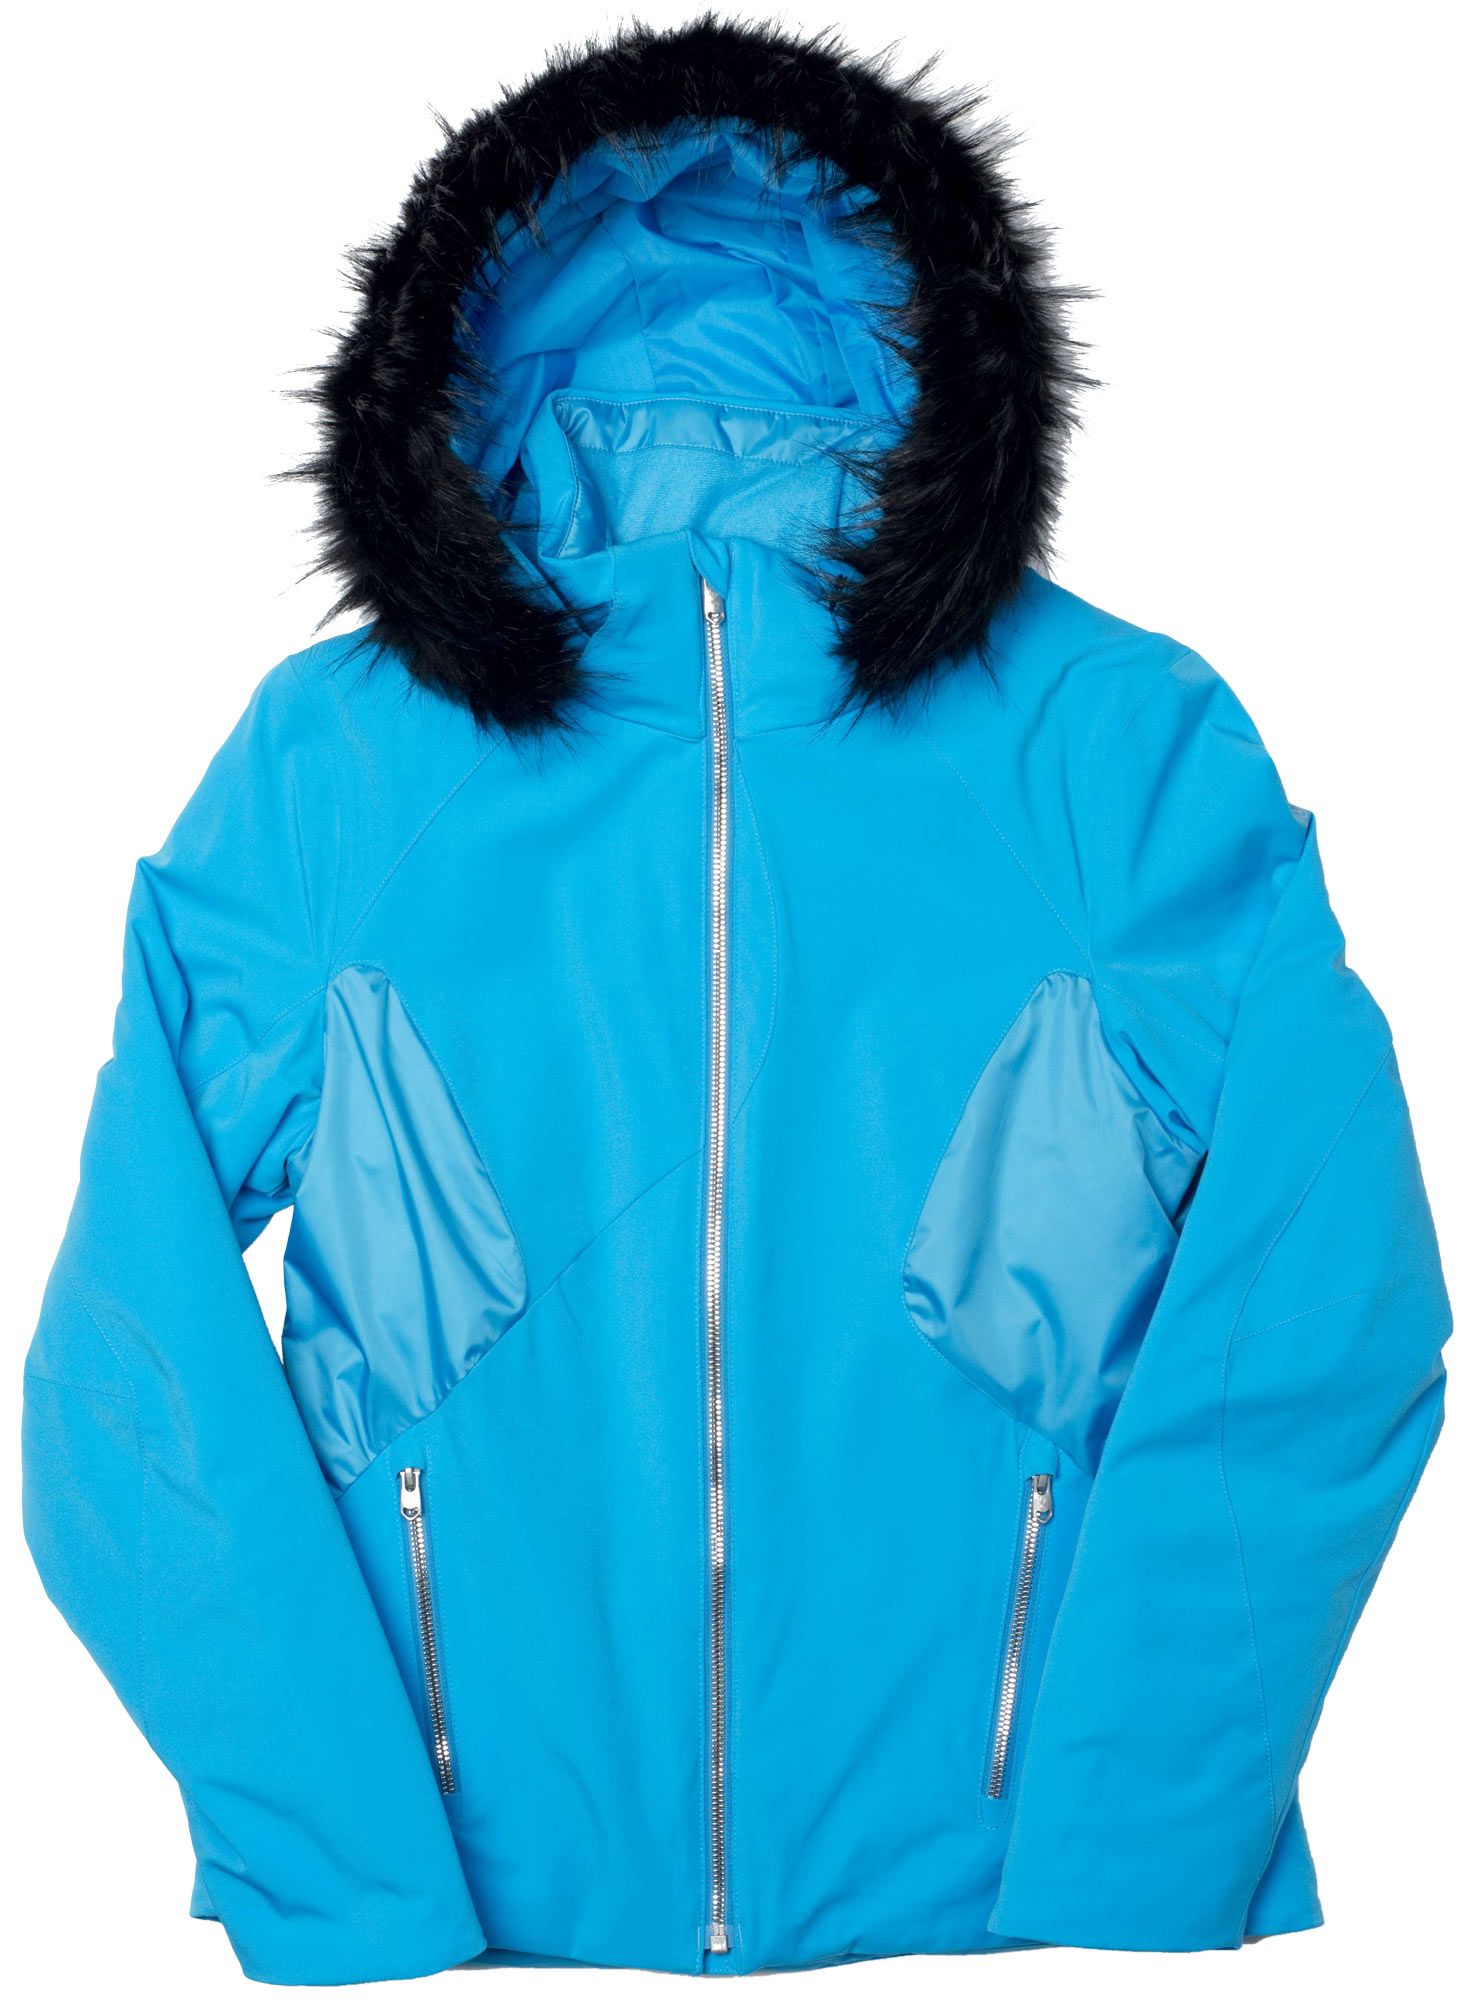 Faux fur ski jackets for women